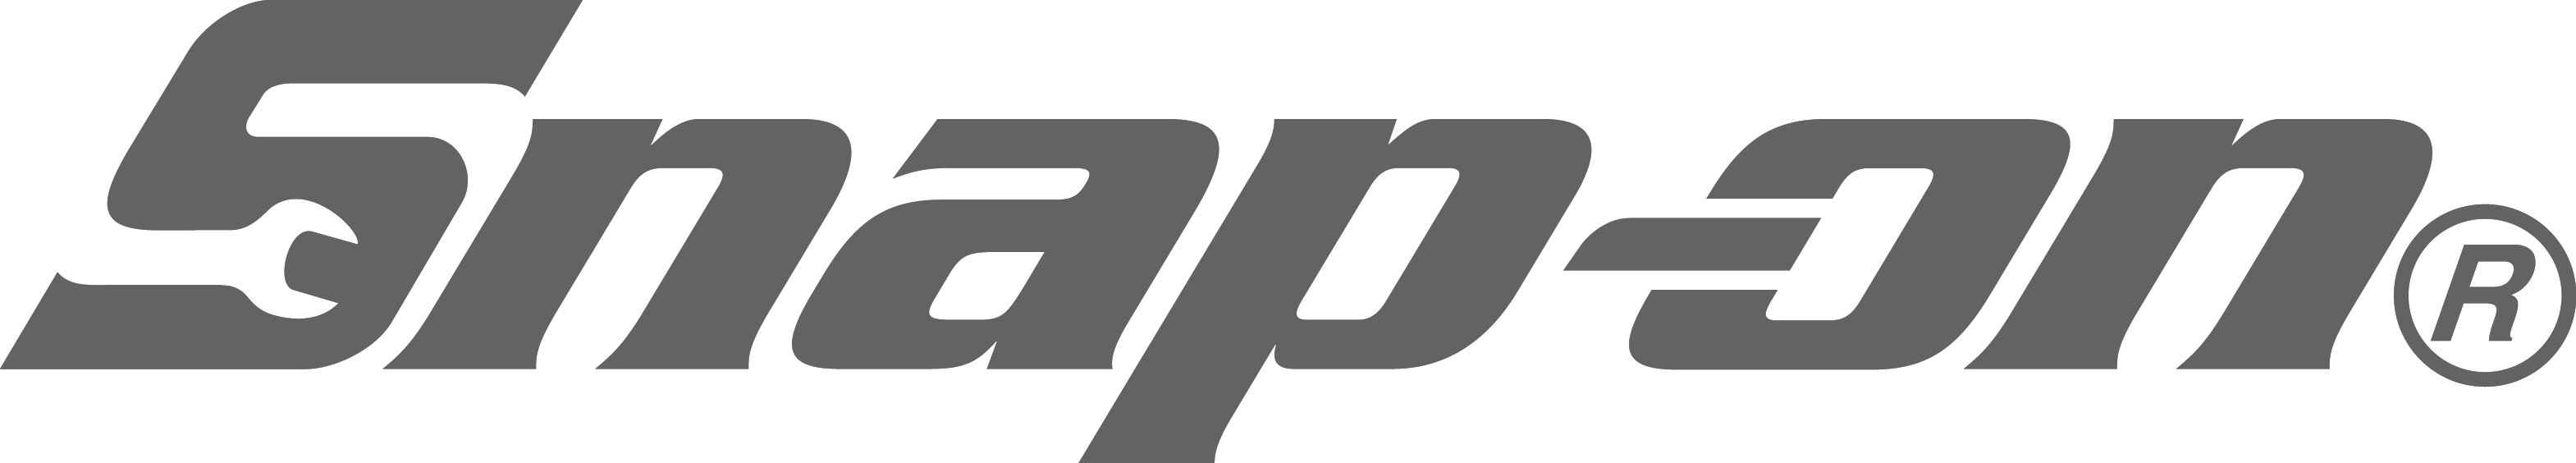 snap raise logo